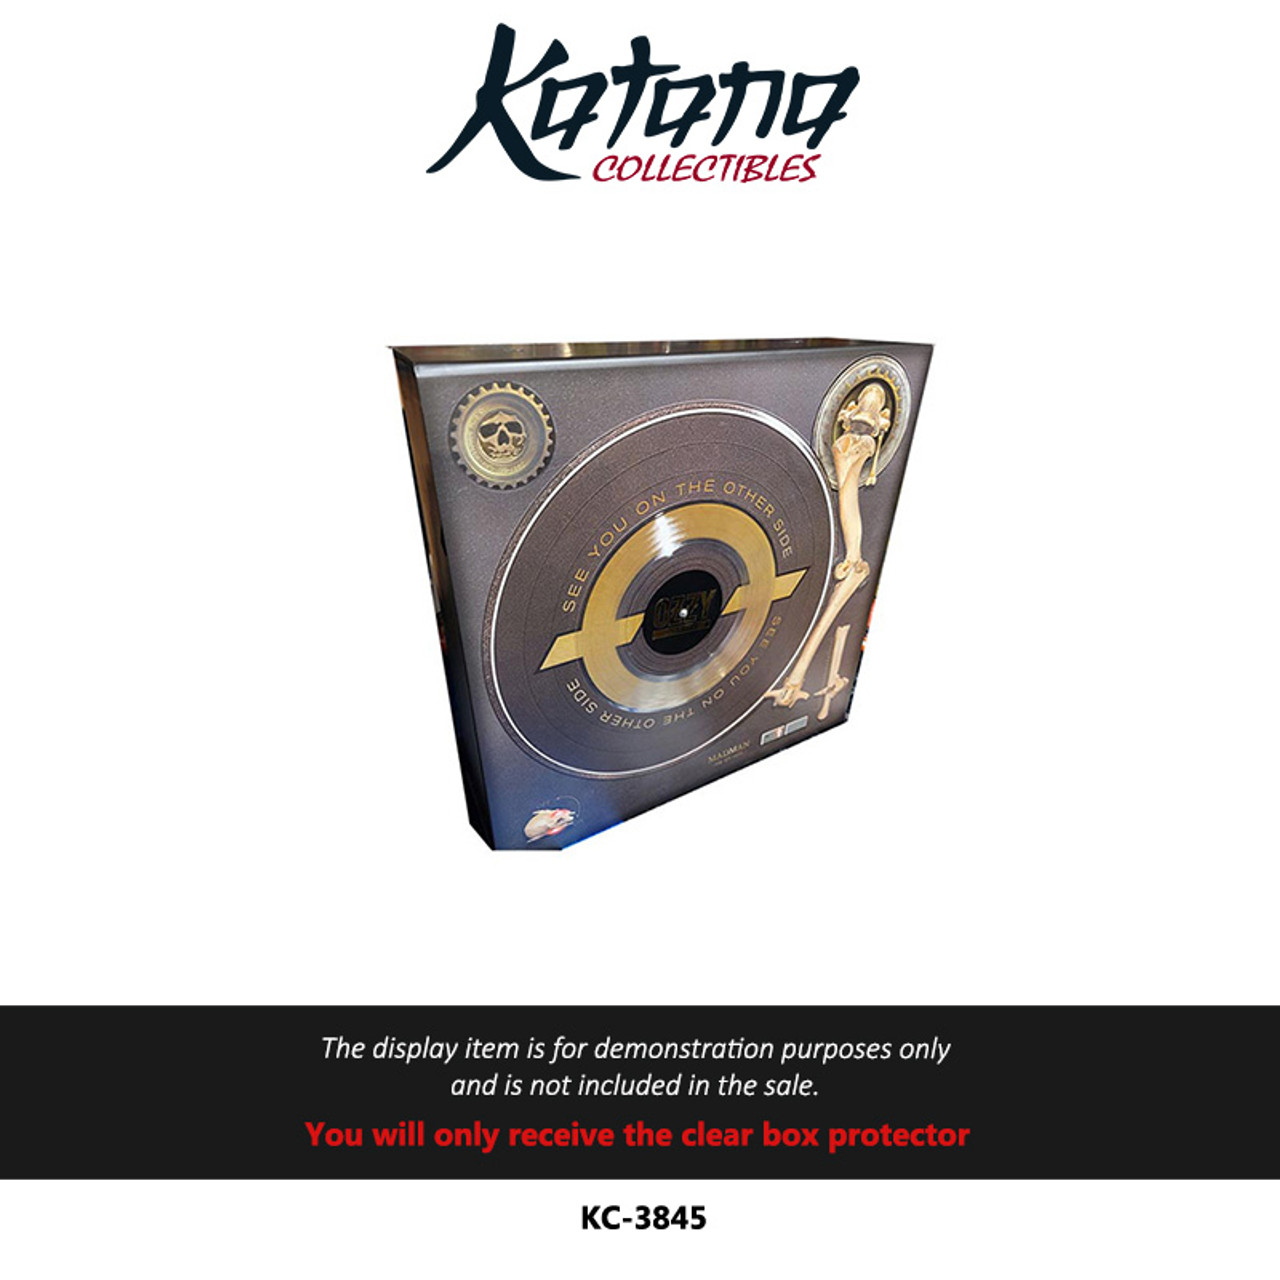 Katana Collectibles Protector For Ozzy Osbourne Vinyl box set